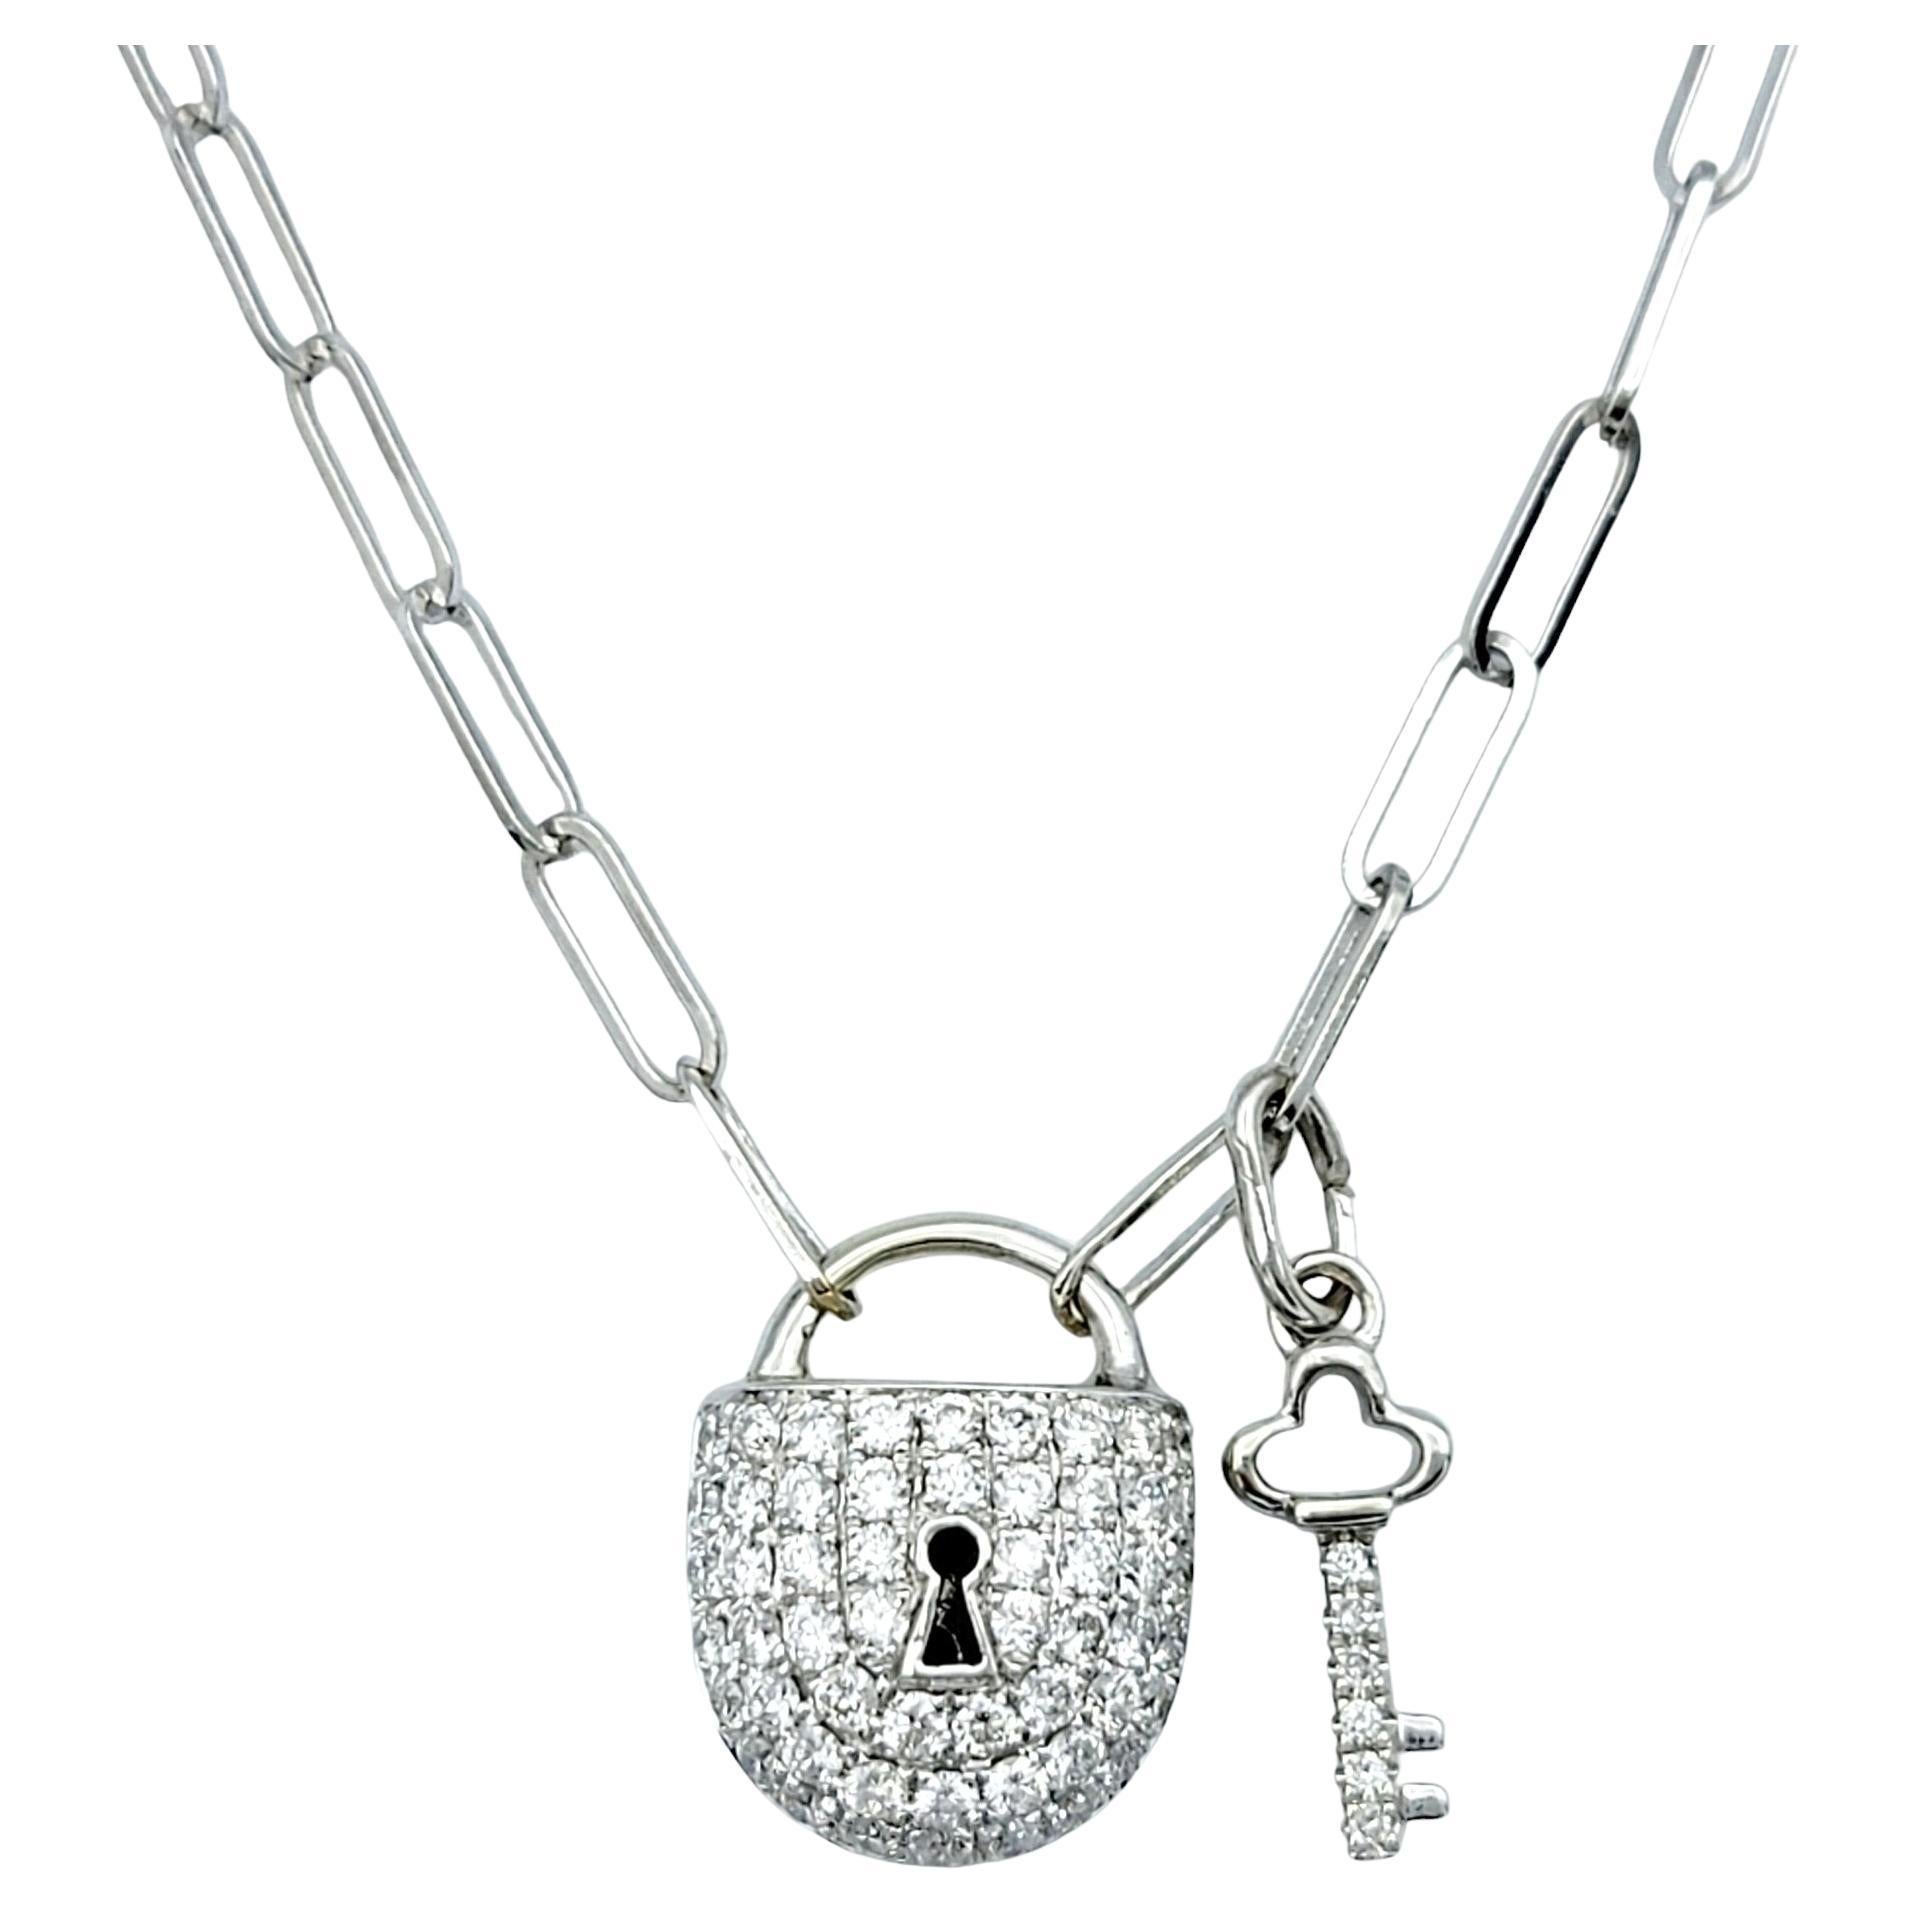 Lock and Key Round Pave Diamond Charm Necklace Set in 18 Karat White Gold